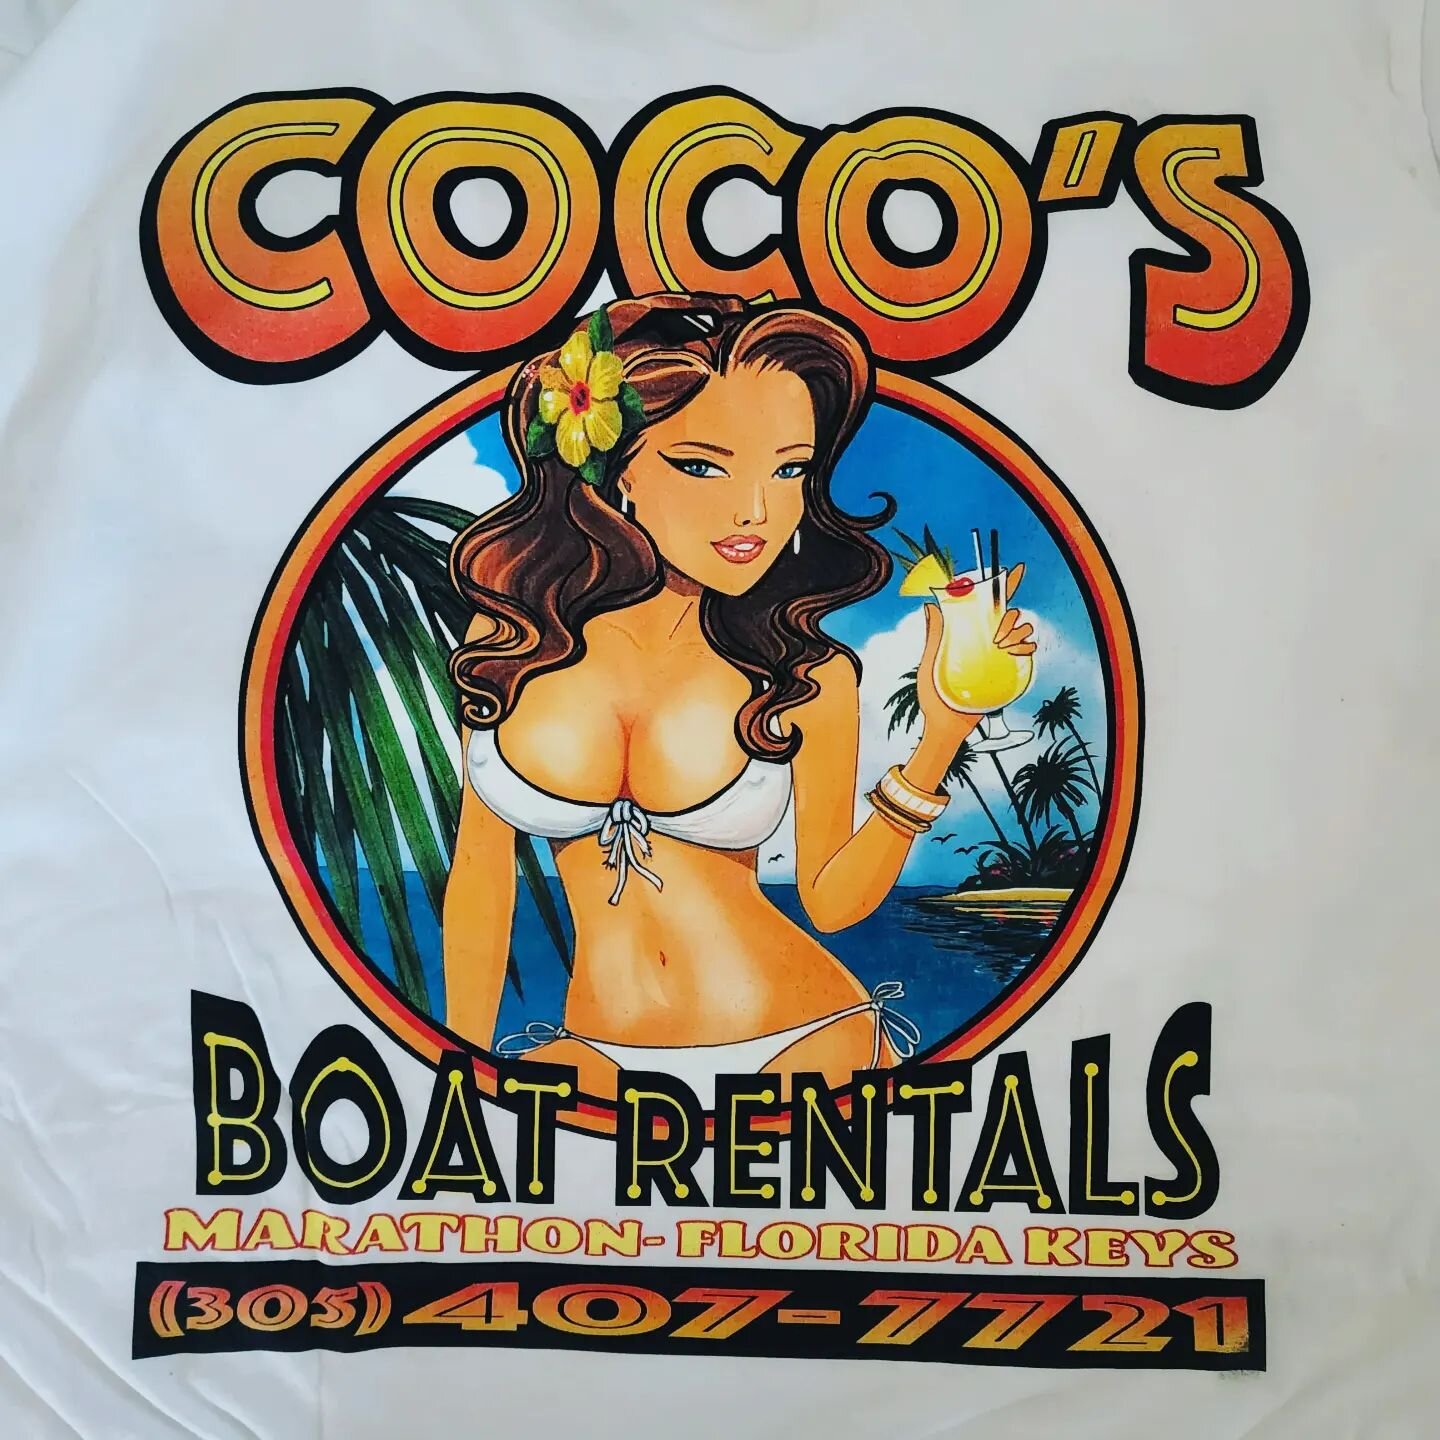 New shirts arrive...#cocosboatrentals #rentaboatmarathon #marathonkey #marathonfloridakeys #floridakeys